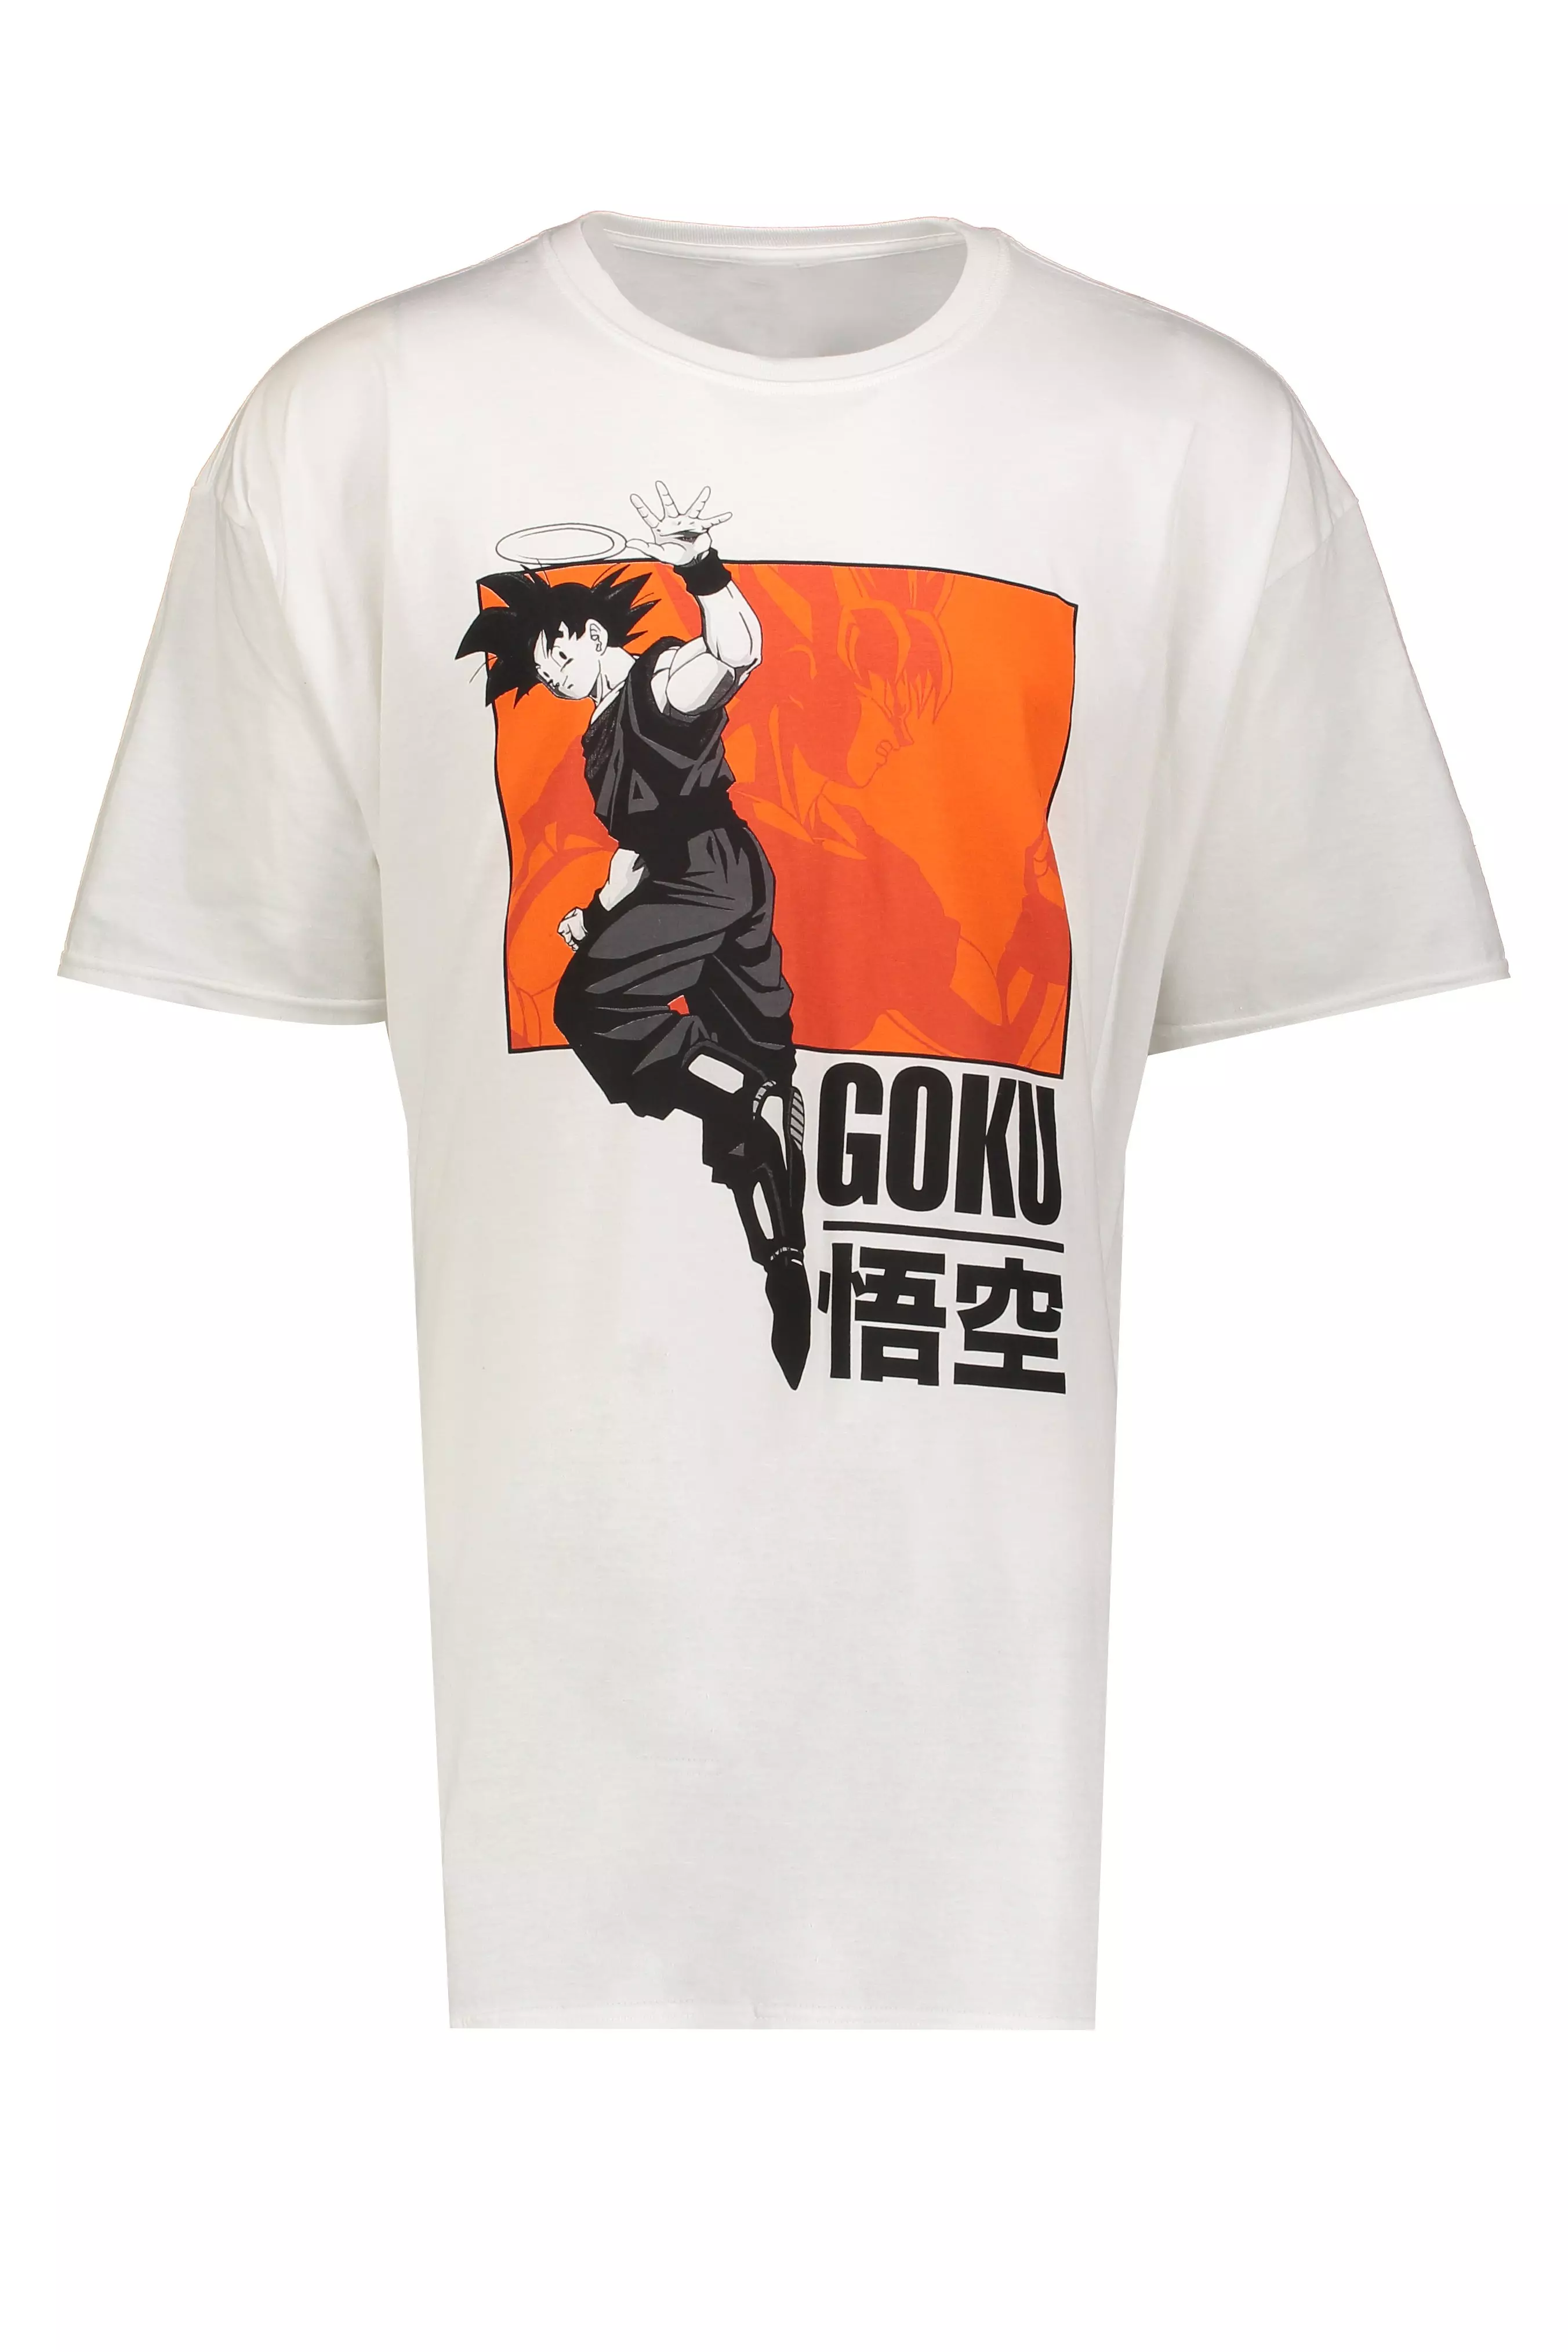 T-shirt Dragon Ball Z - Personalizei